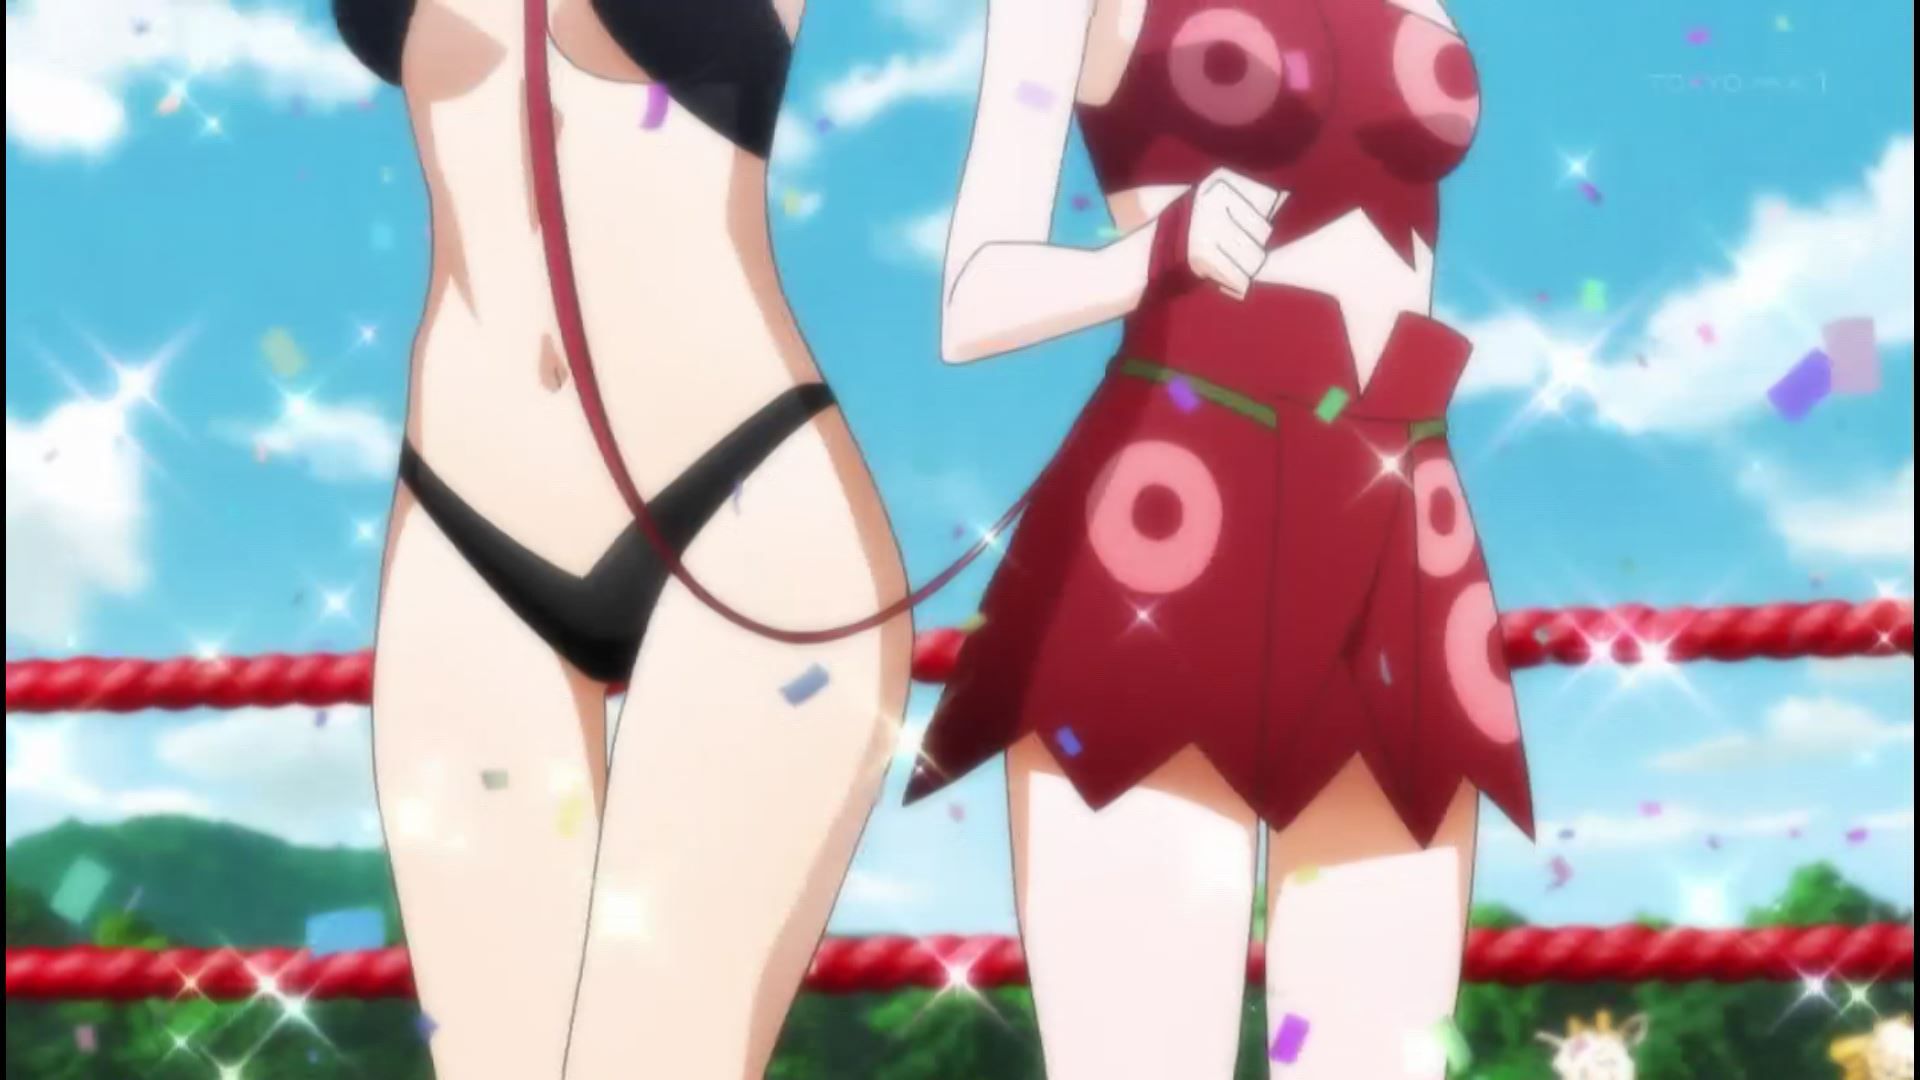 Anime [Shimarenuse] Seaton Gakuen] scene that girls become insanely erotic costumes in episode 12 20